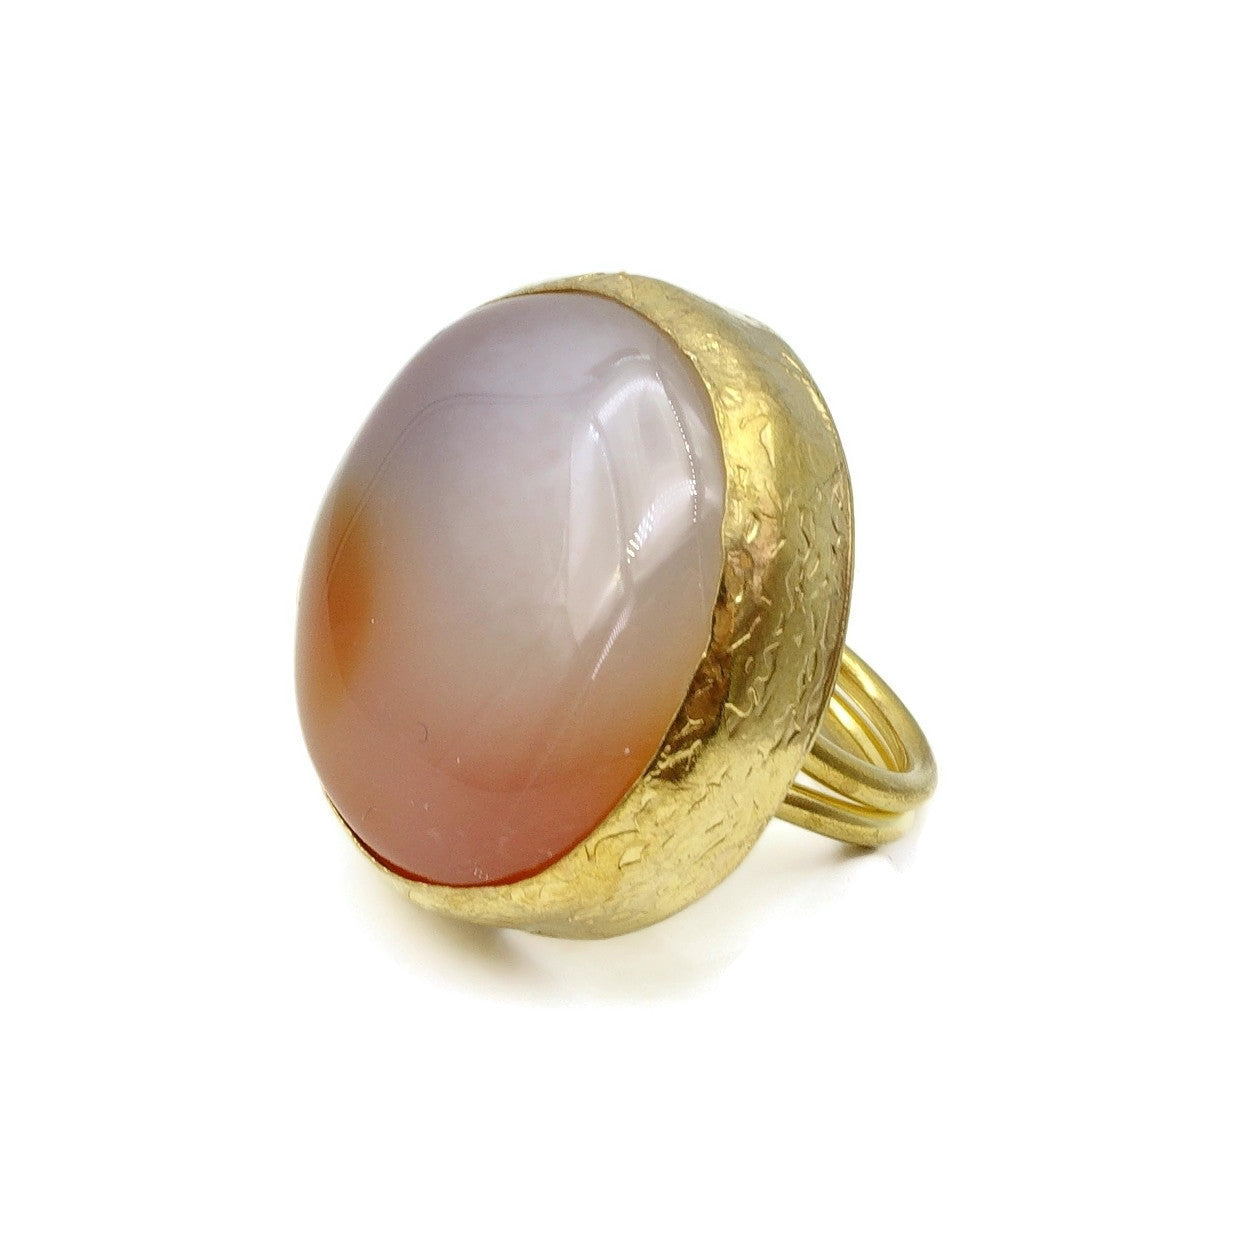 Aylas Agate semi precious gemstone ring - 21ct Gold plated brass - Handmade Ottoman Style